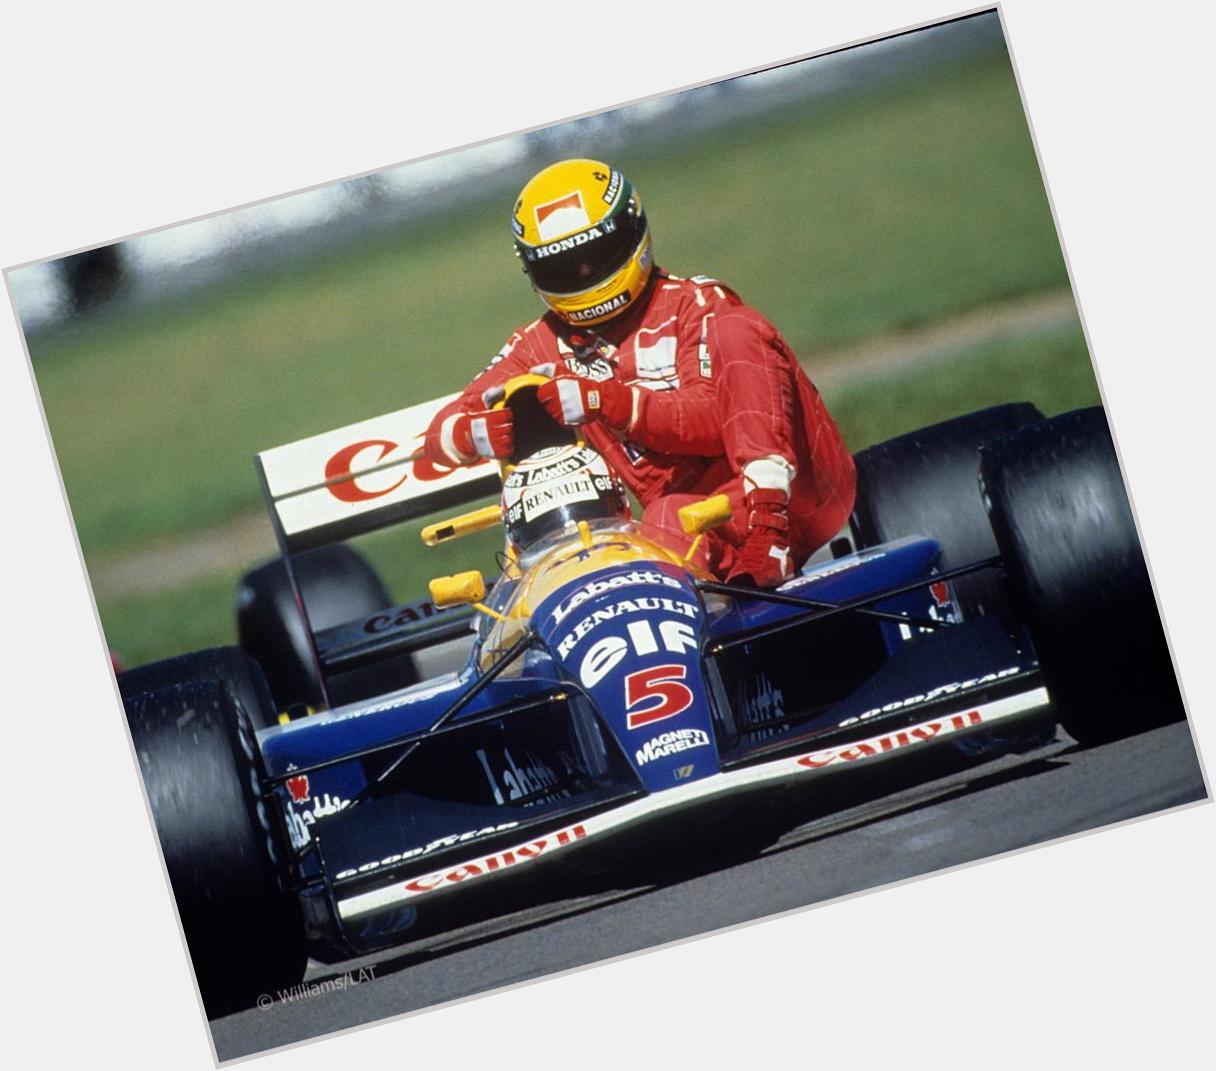 Born 1953: The 1992 World Champion Nigel Mansell, happy birthday! 